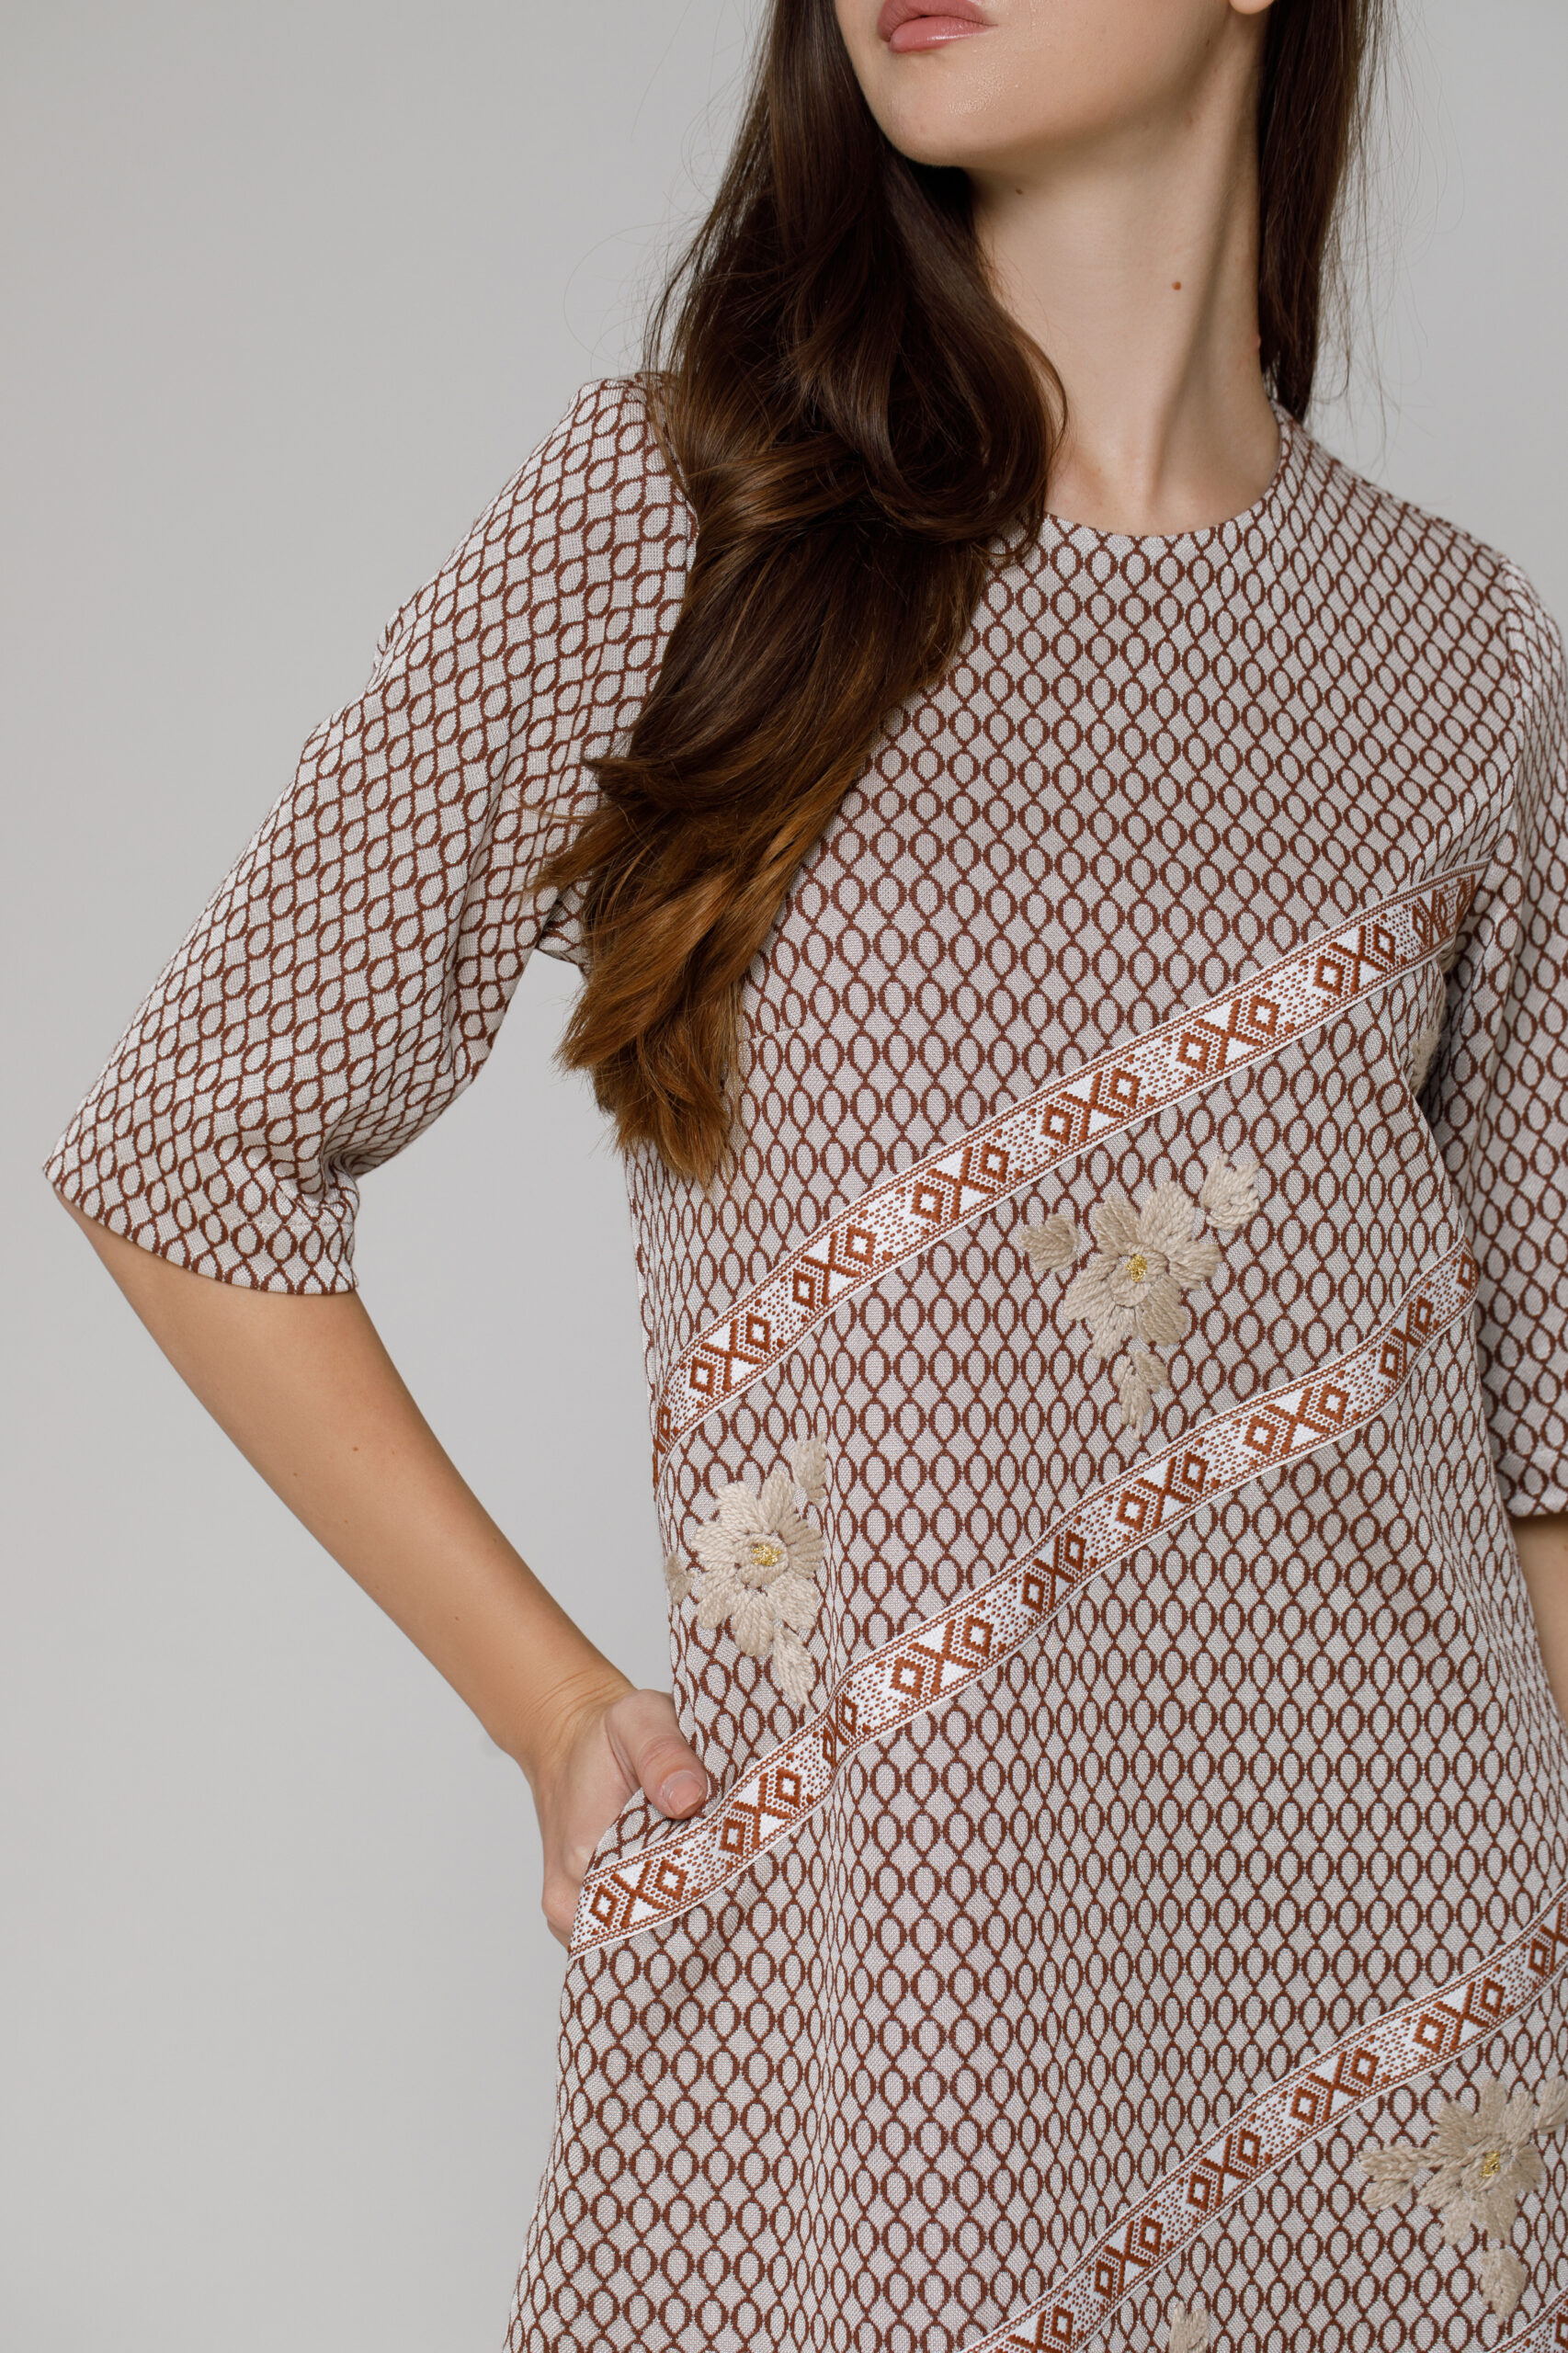 ARELLA BEIGE dress with geometric print. Natural fabrics, original design, handmade embroidery